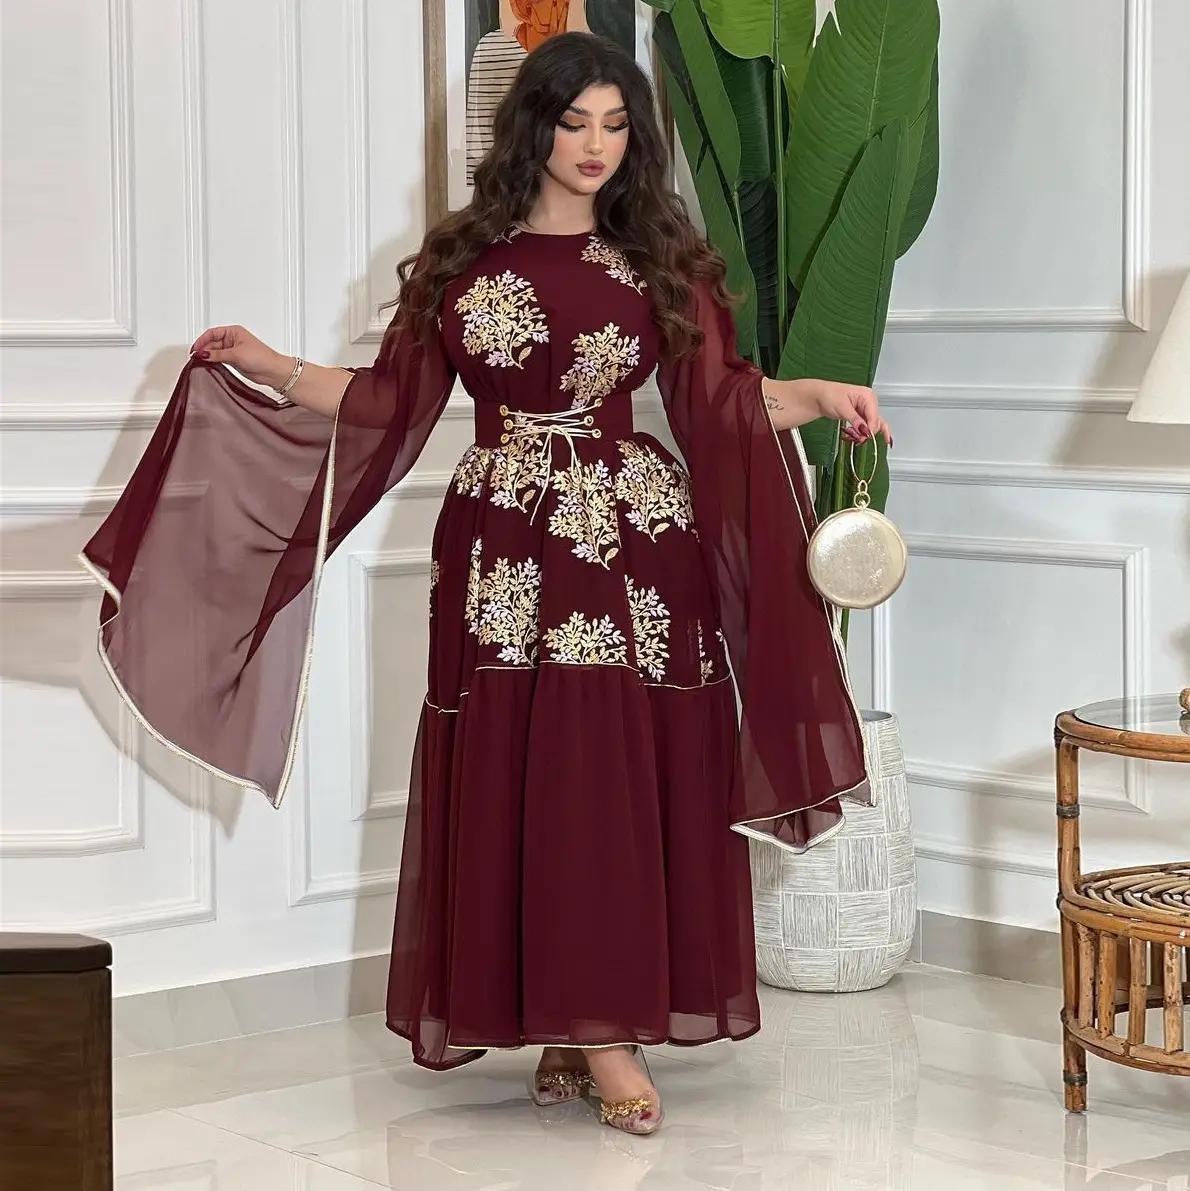 2022 new Middle East women's clothing Arab clothing Muslim women's clothing mesh covered meat large sleeve Dubai abaya for sale